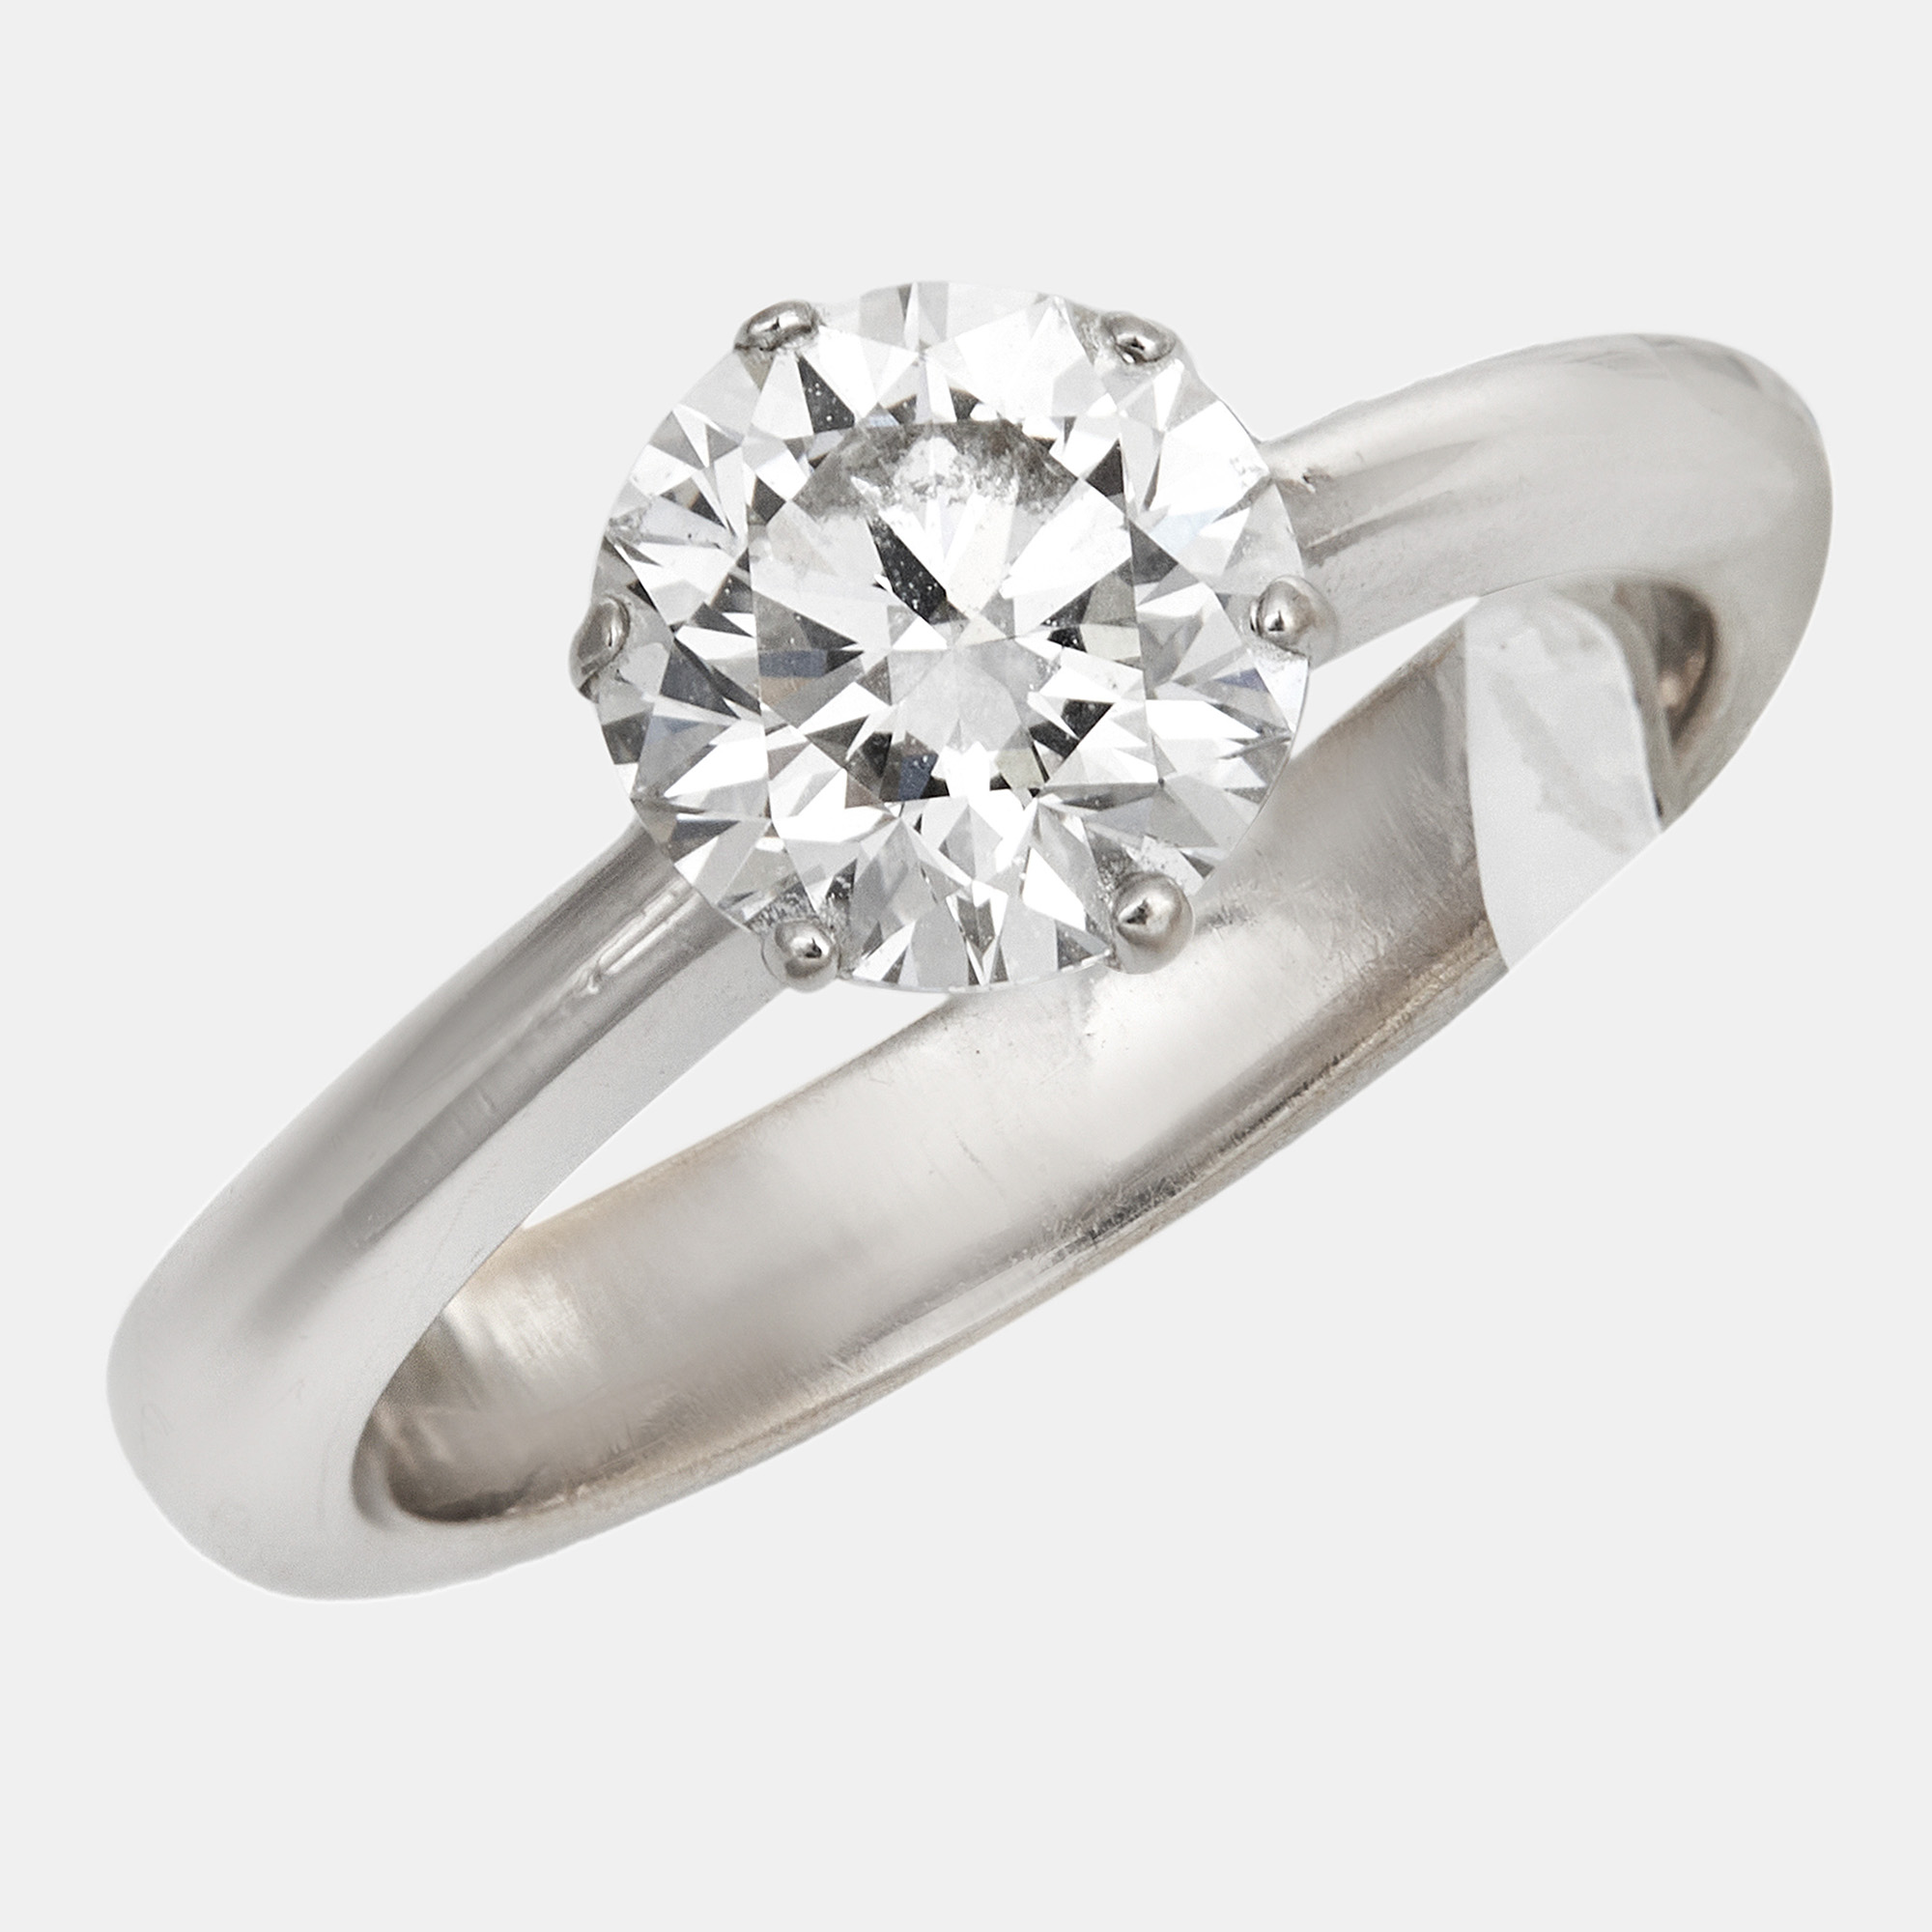 The diamond edit 18k white gold  ring